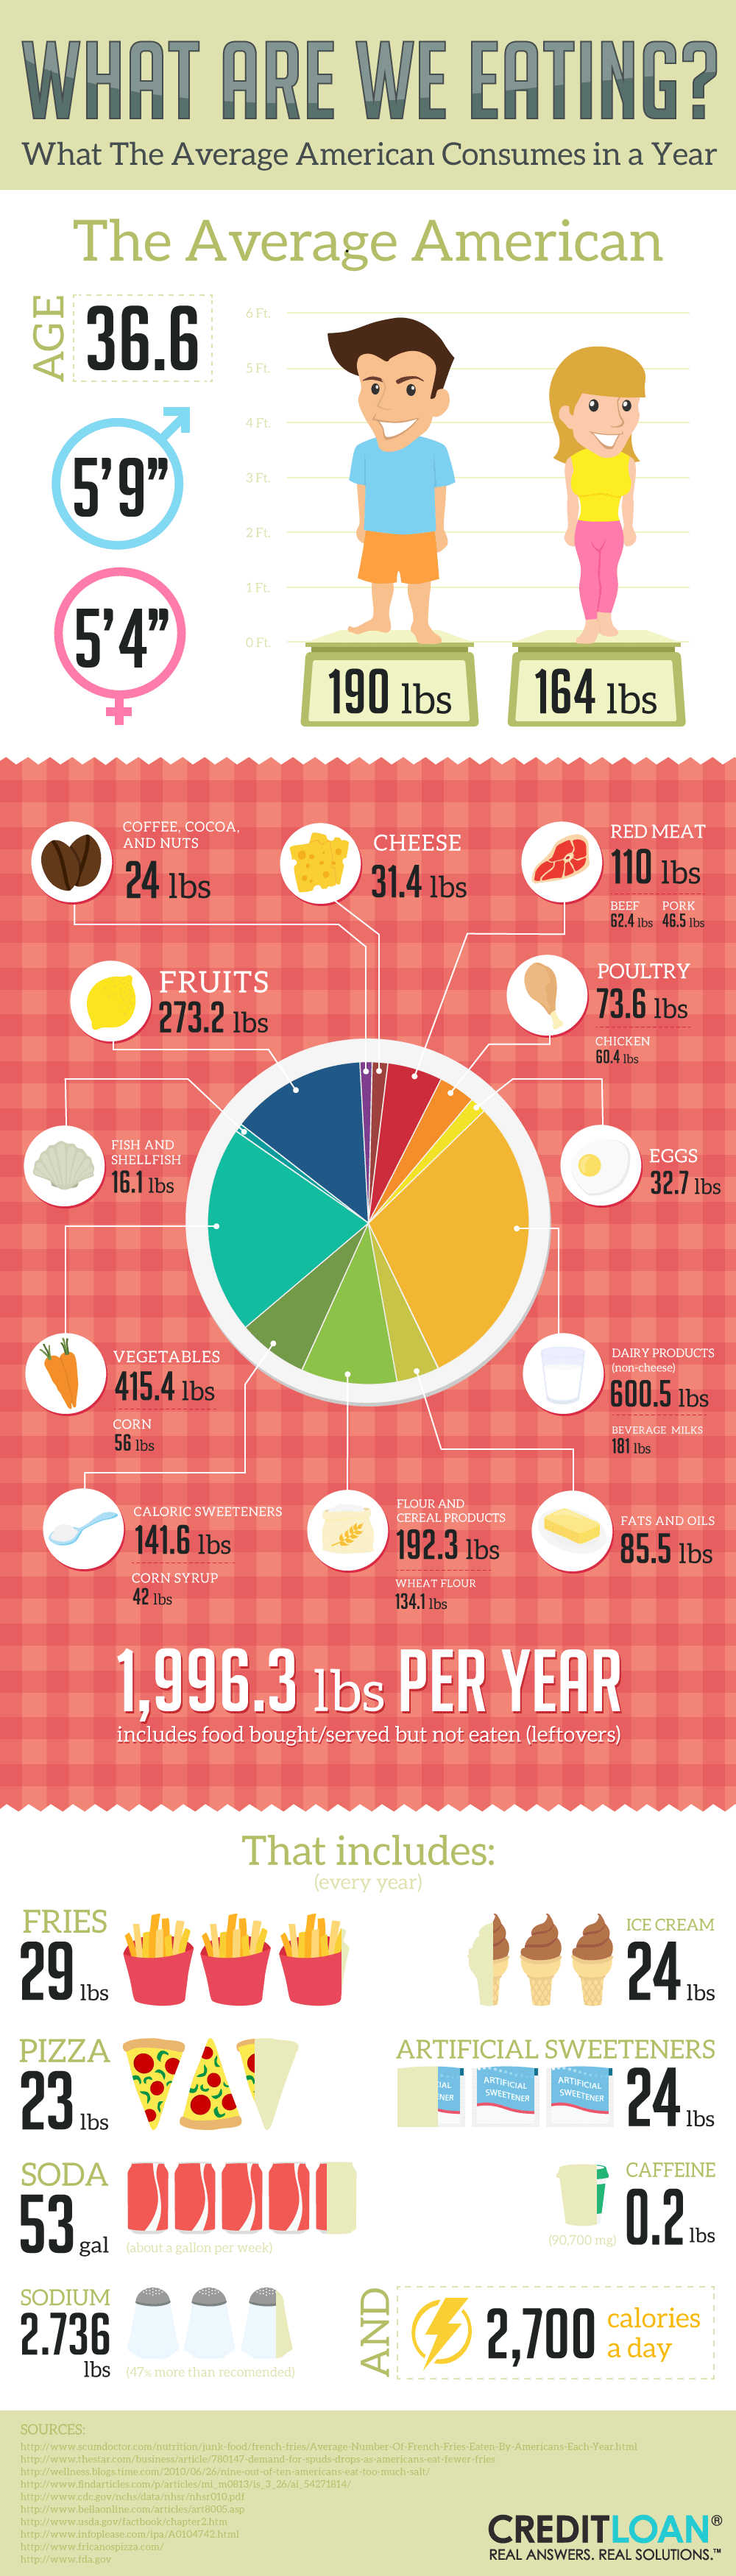 Food Consumption in America - CreditLoan.com®